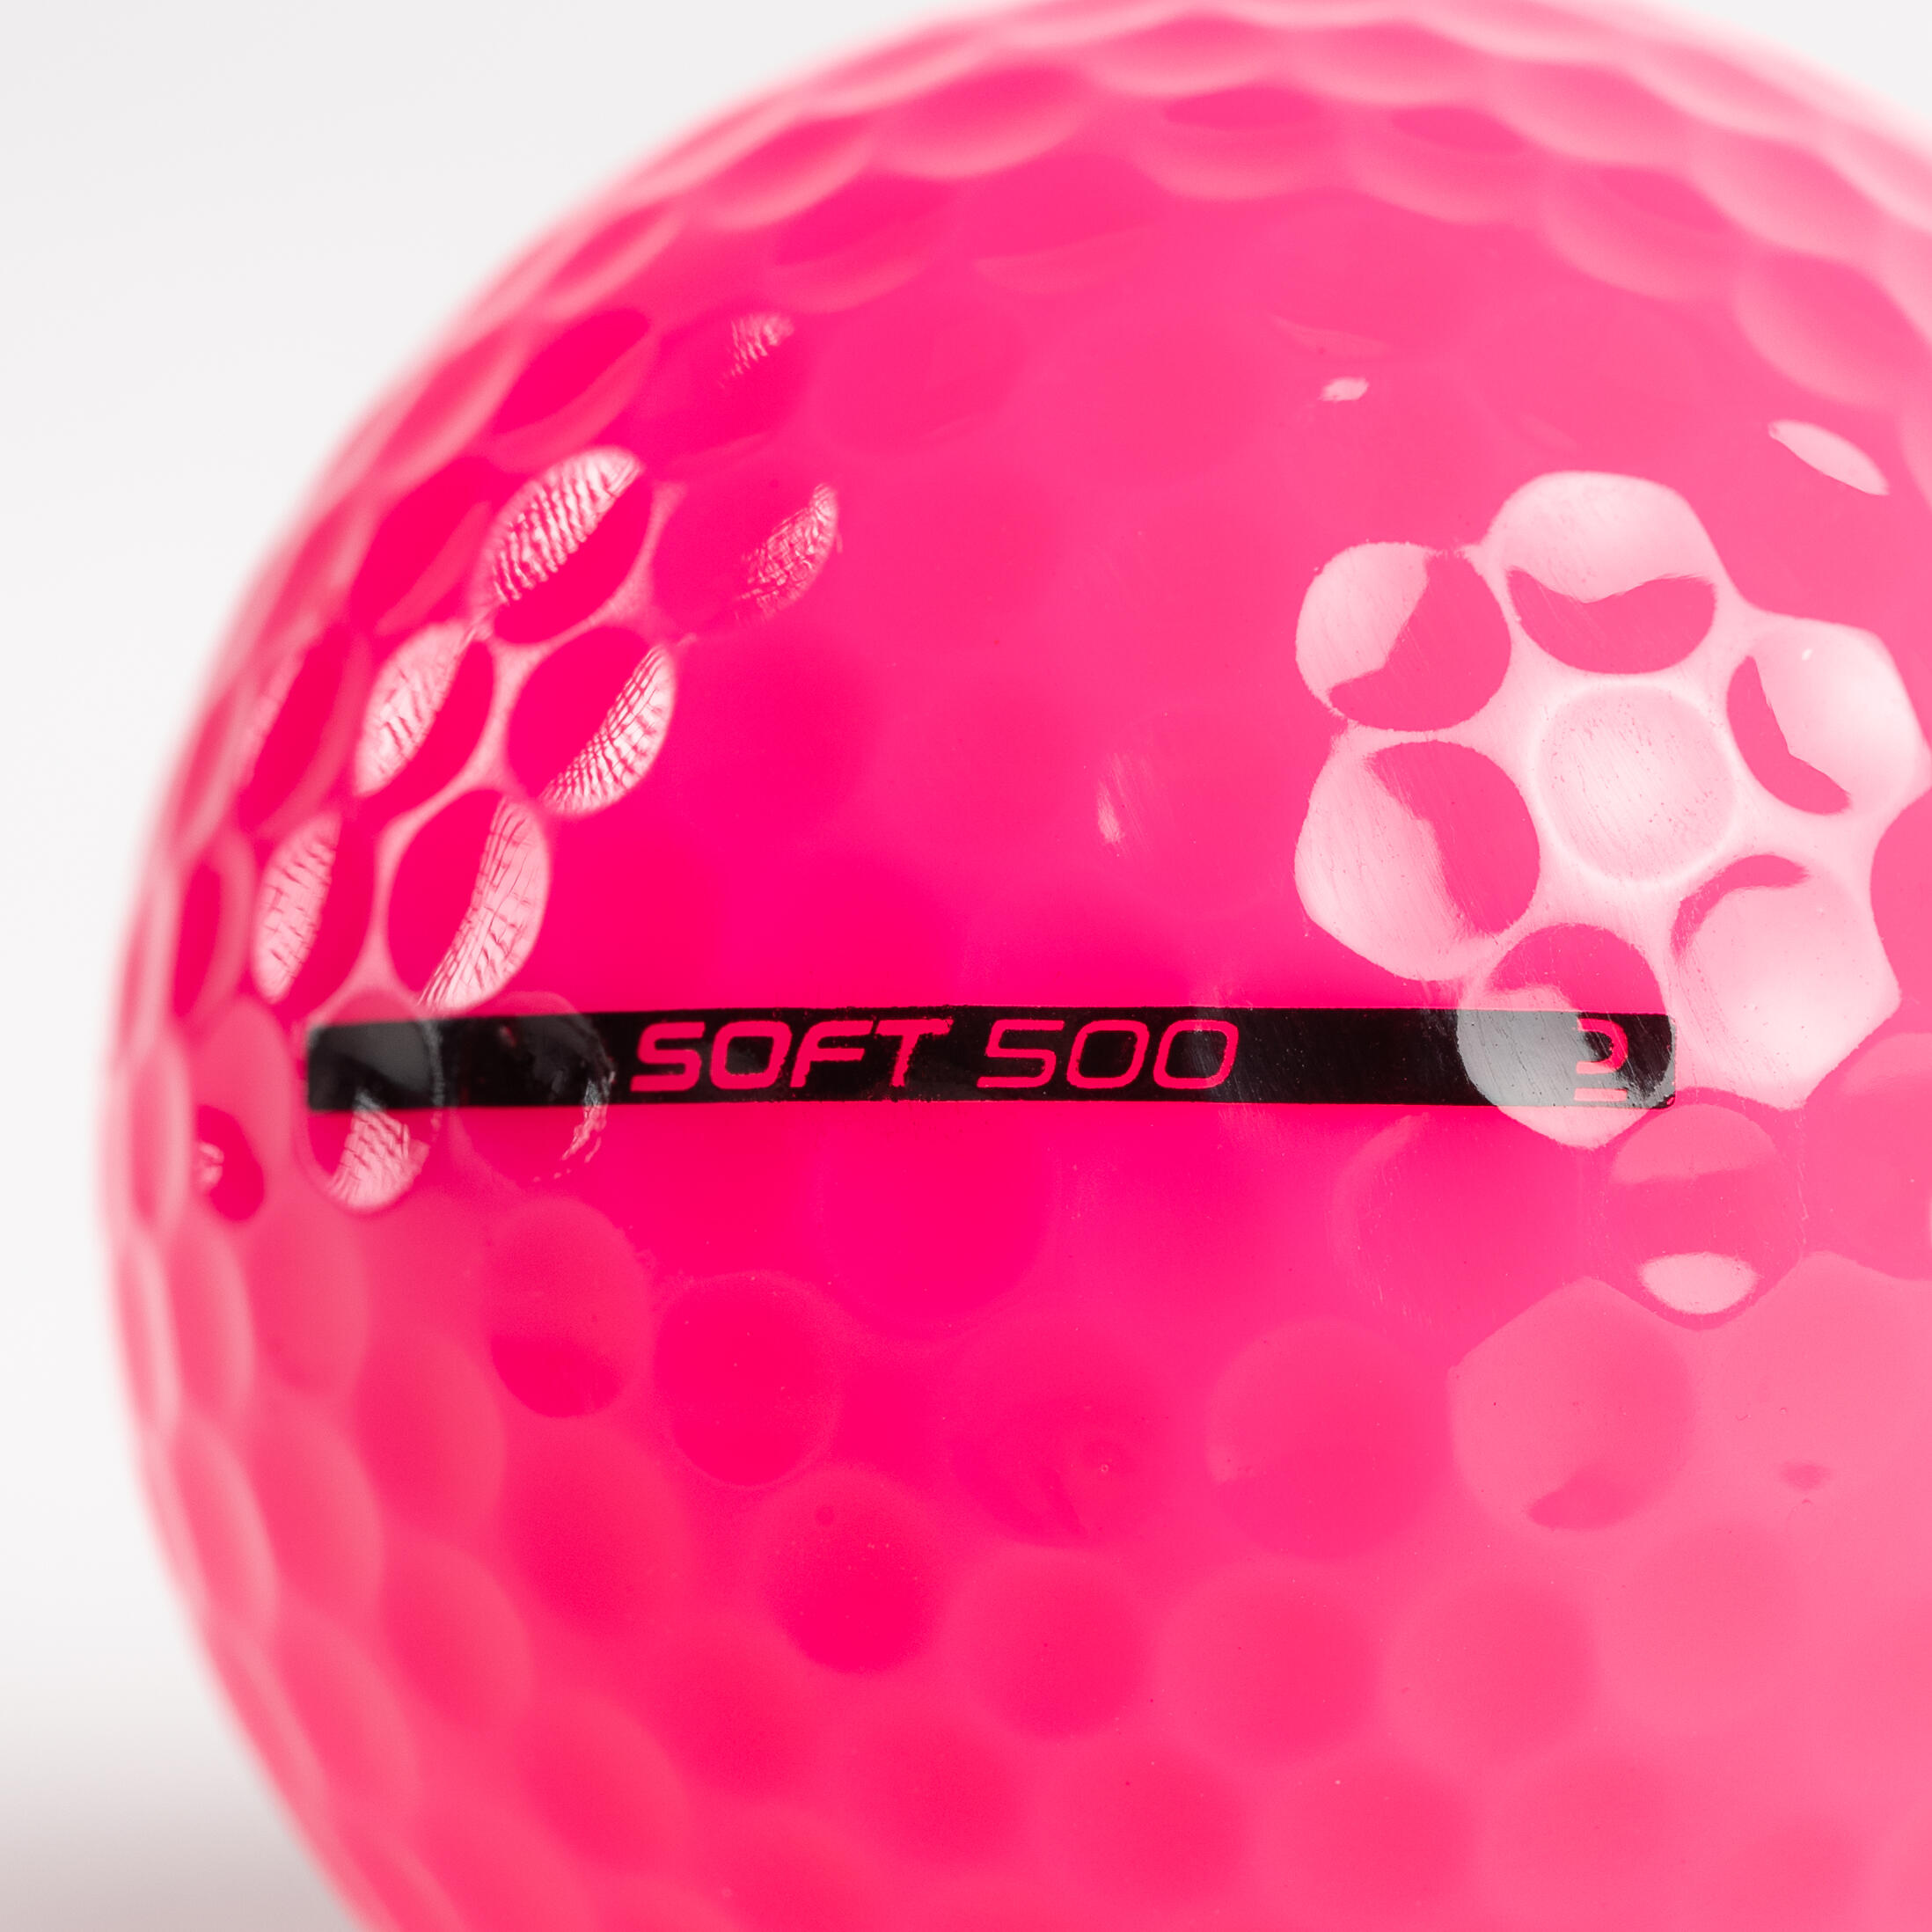 Balles de golf douces x12 – Soft 500 rose - INESIS